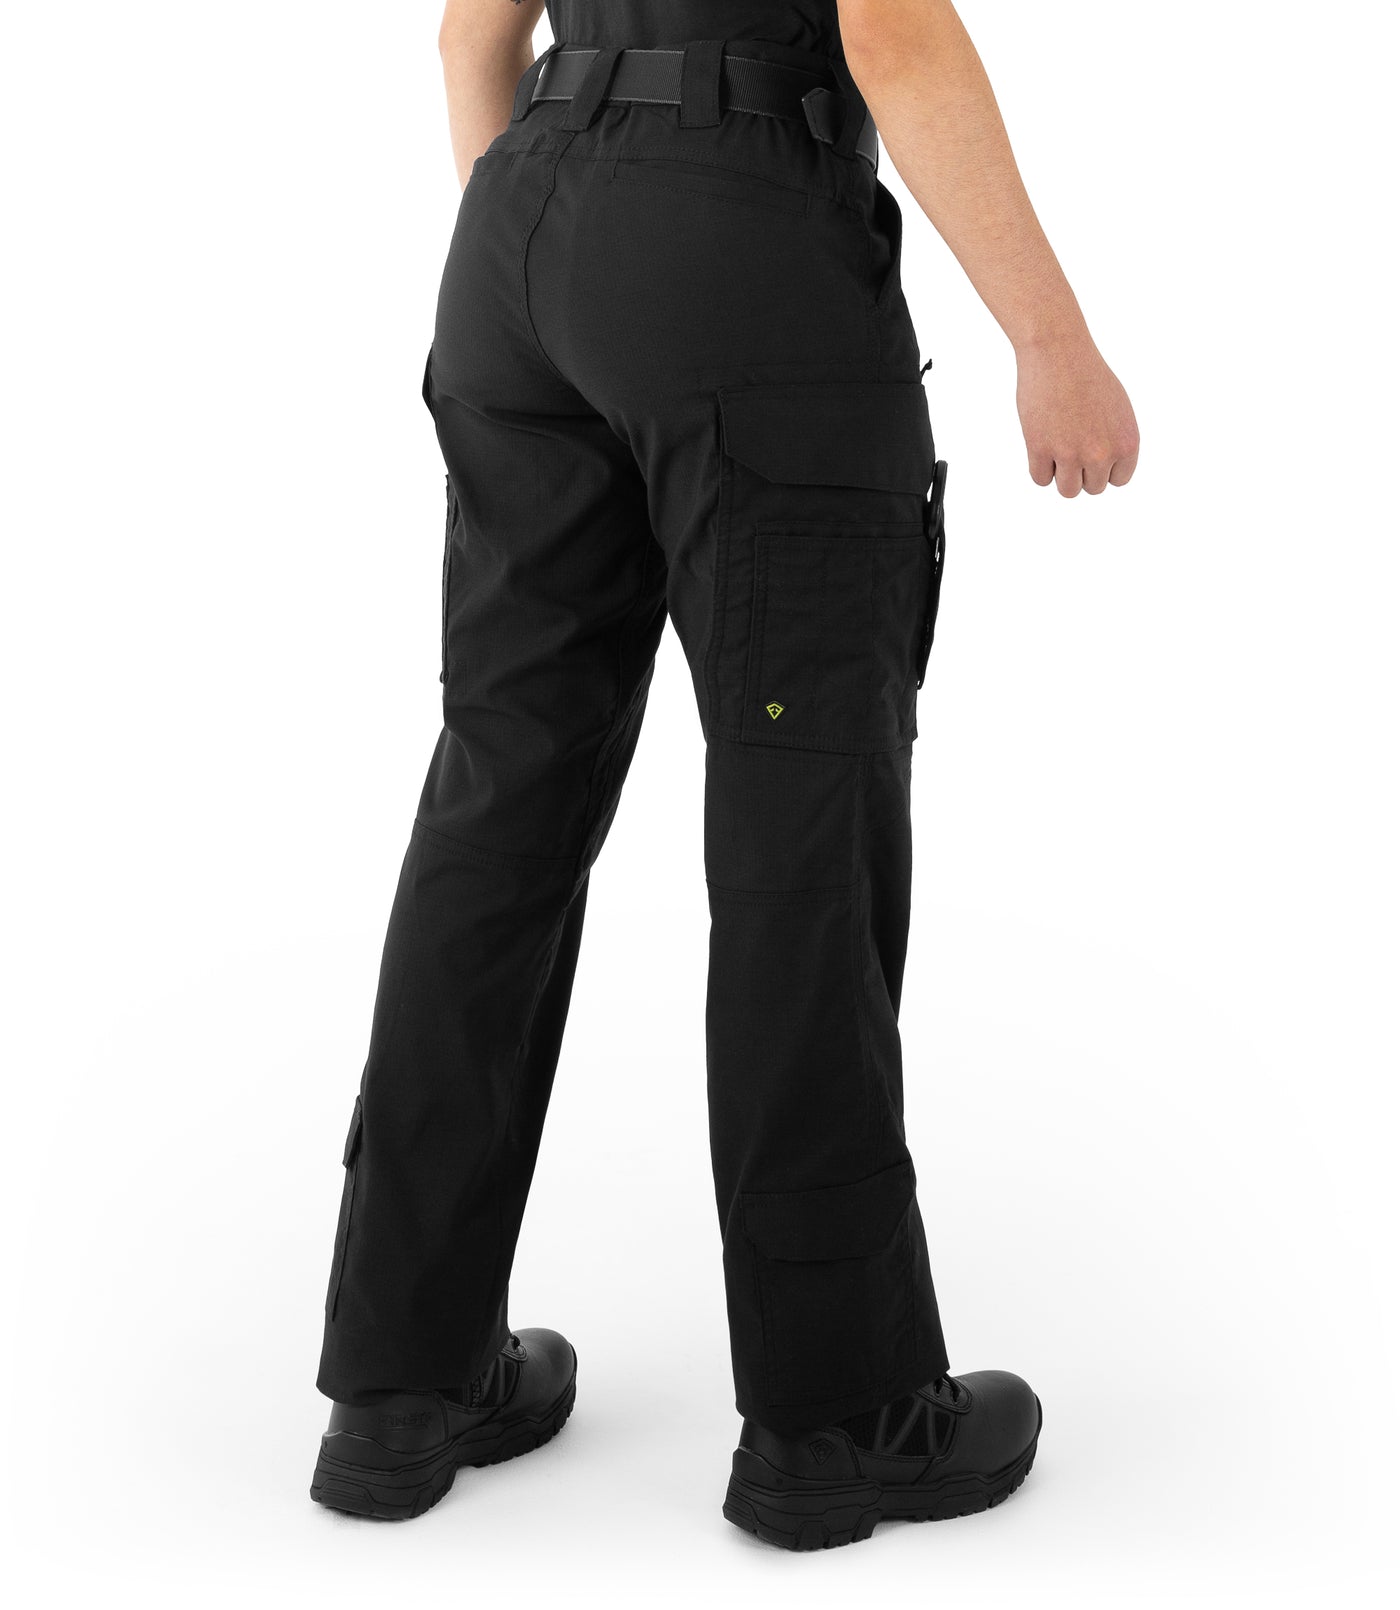 Women's EMS Pants, Tactical Performance & Comfort